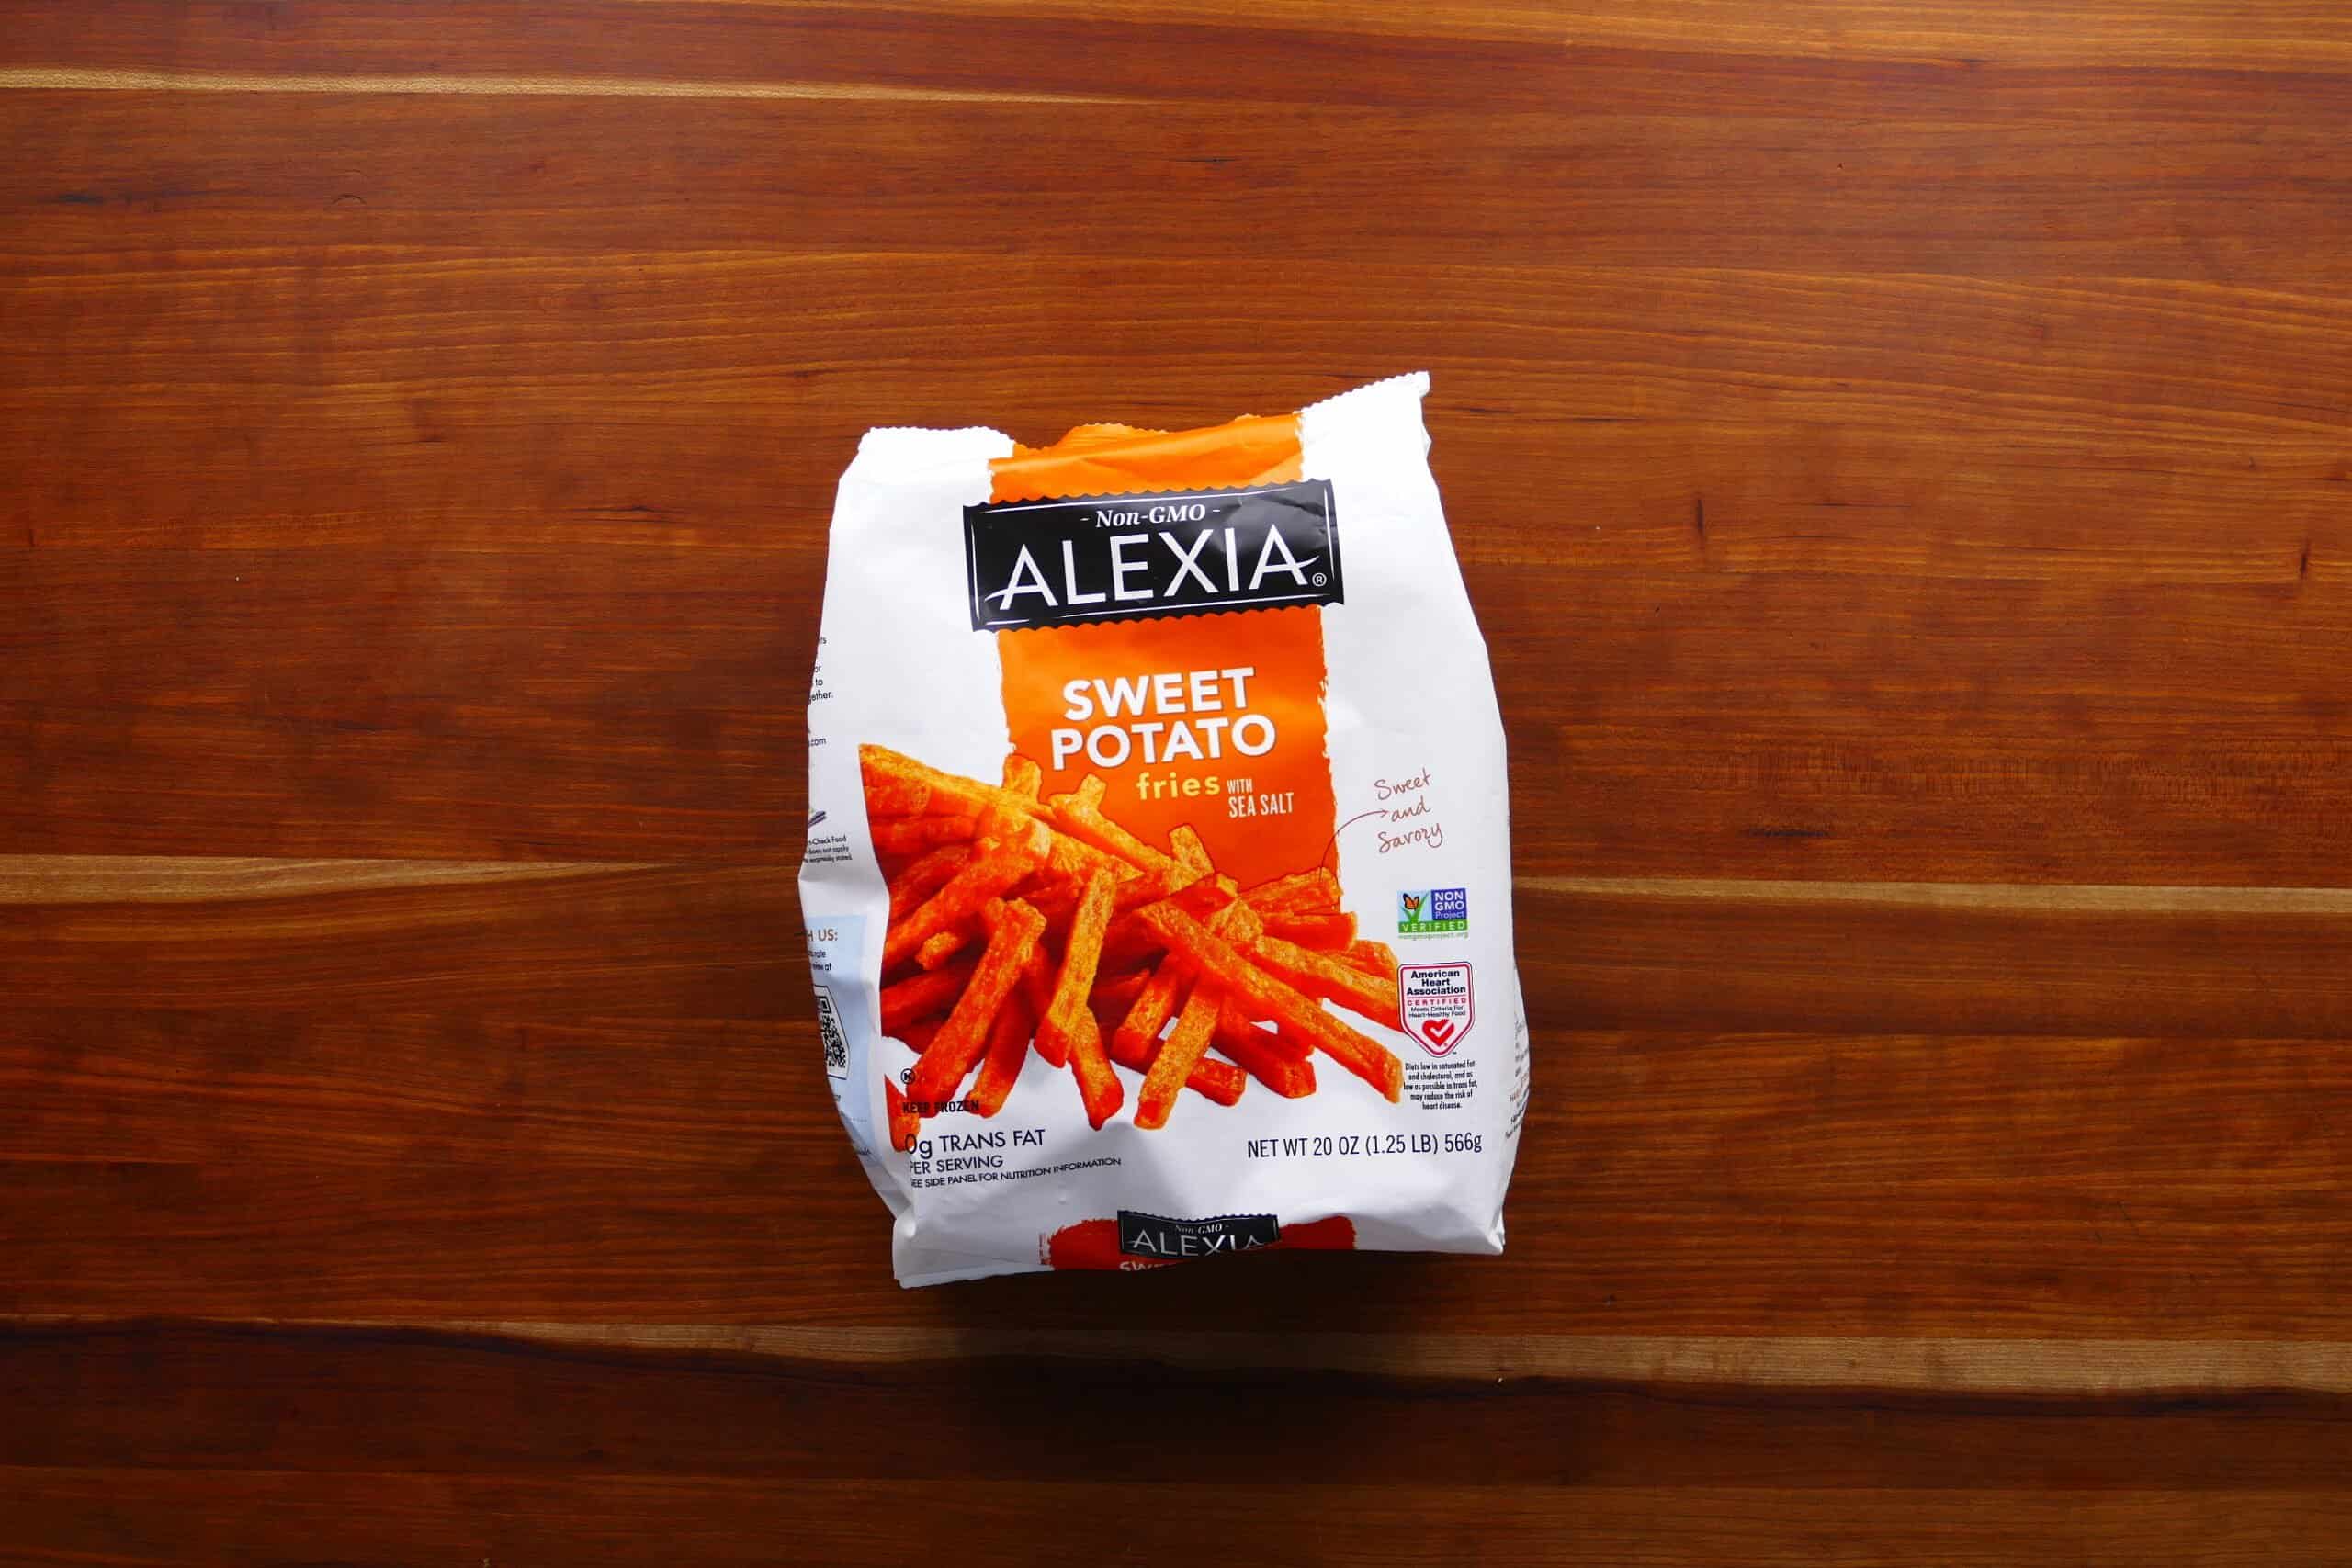 20 ounce bag of Alexia (non GMO) sweet potato fries with sea salt